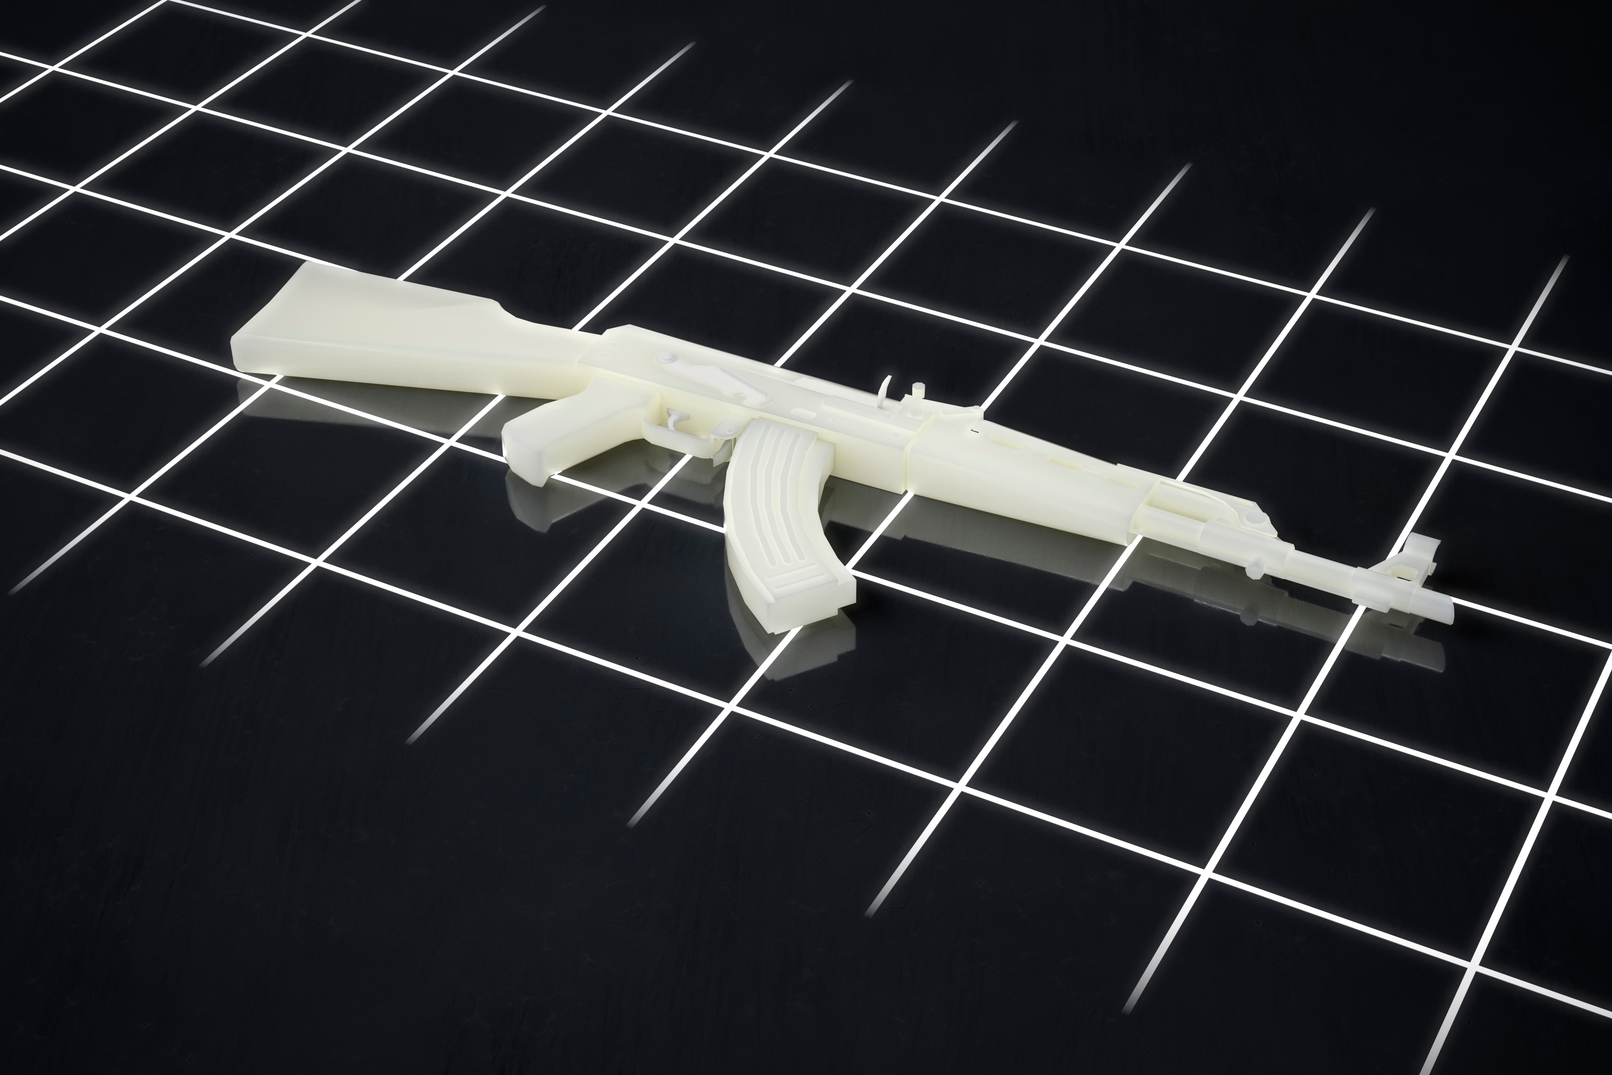 Federal Judge Blocks Publication of Blueprints for 3D Printed Guns